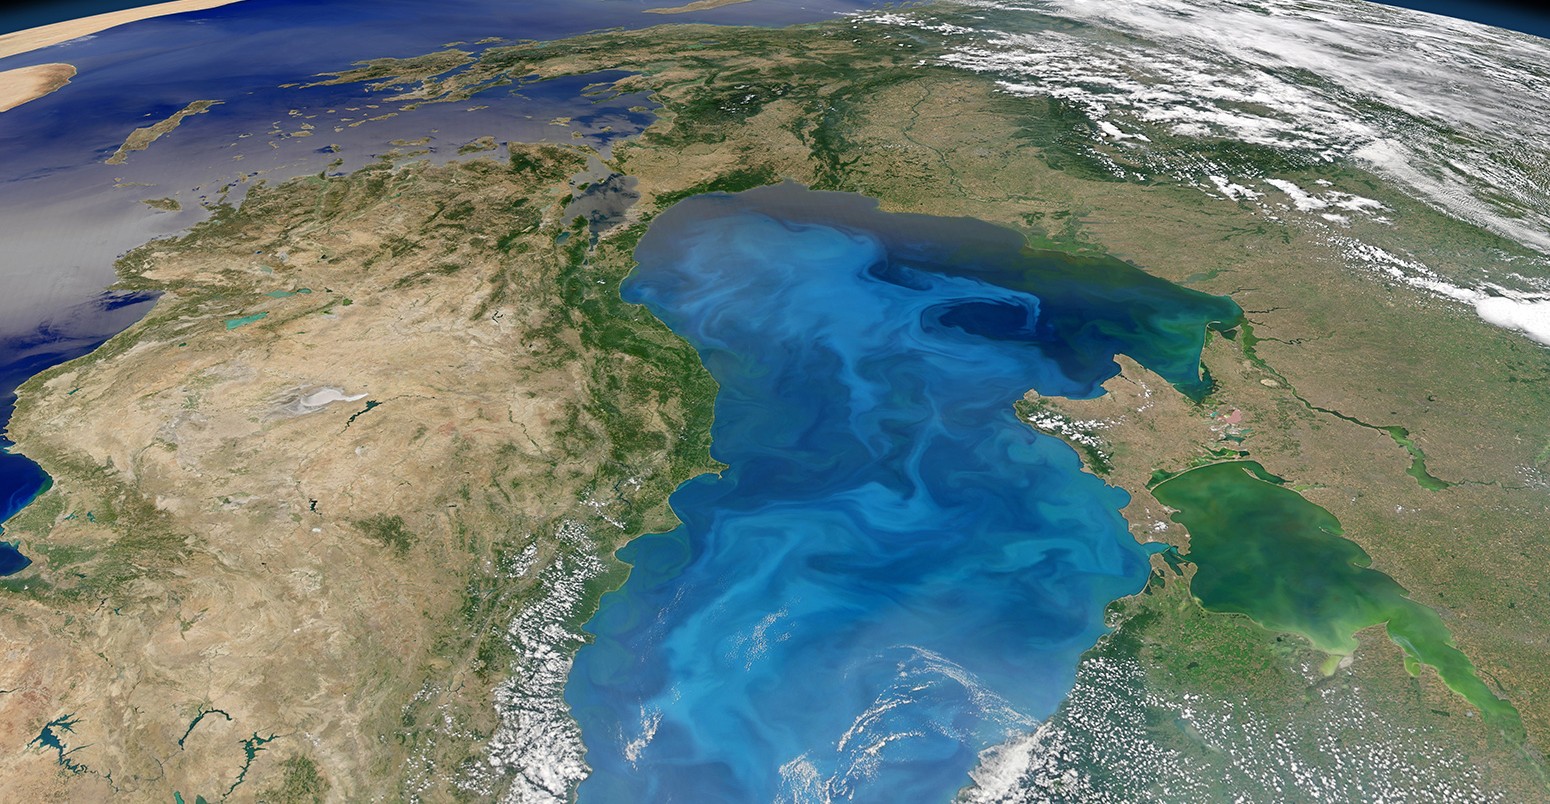 Algae Bloom in the Black Sea